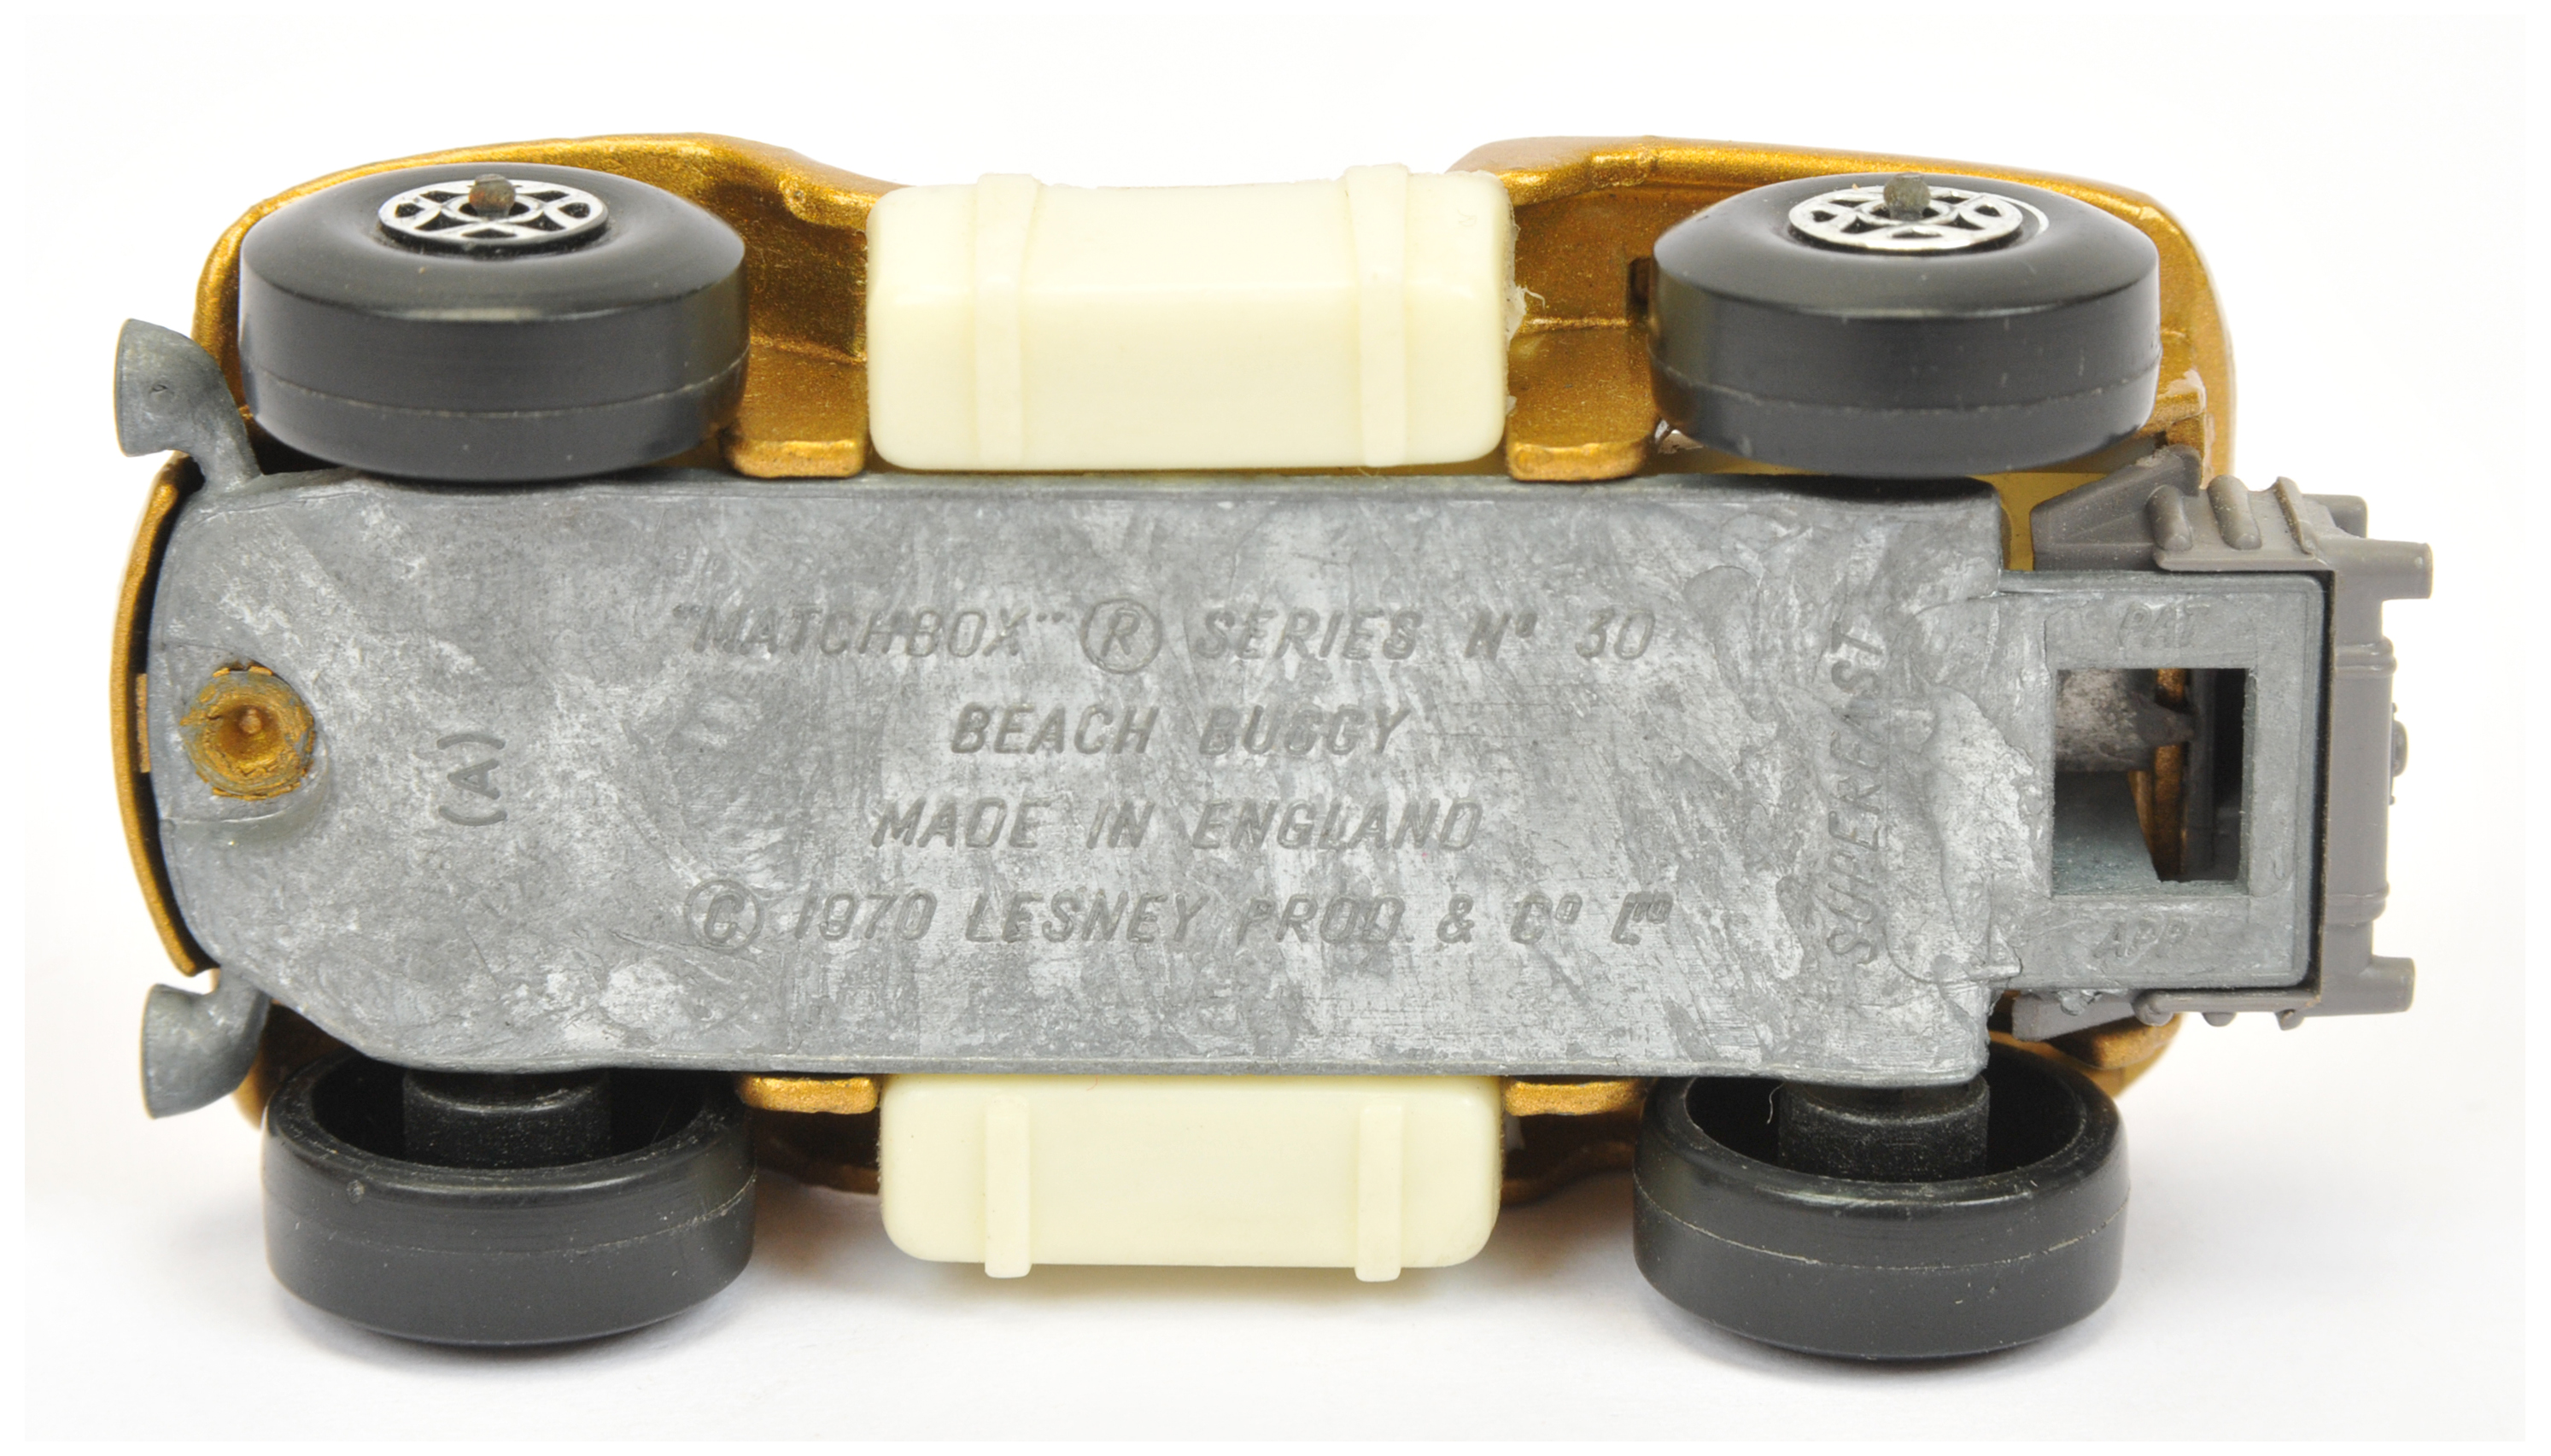 Matchbox Superfast 30b Beach Buggy factory Pre-production colour trial - metallic gold body, clea... - Bild 3 aus 3